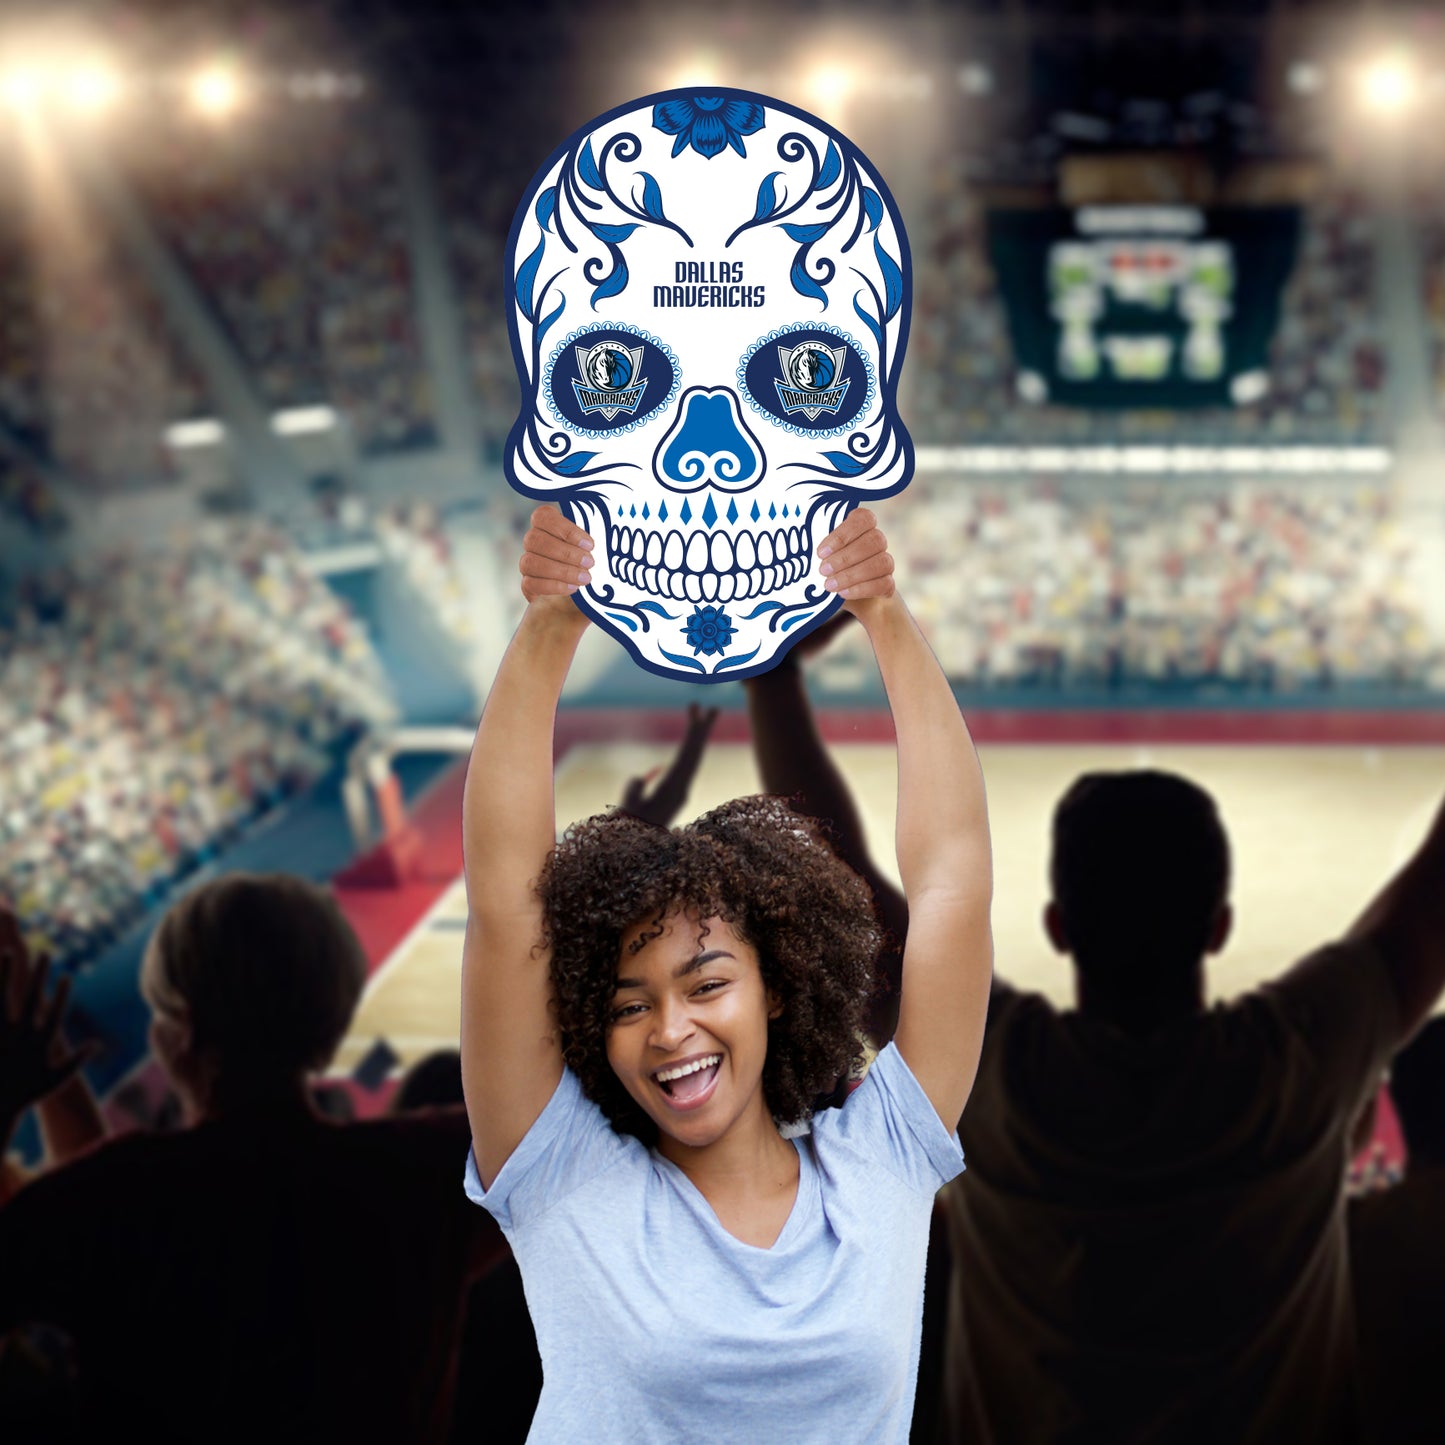 Dallas Mavericks: Skull Foam Core Cutout - Officially Licensed NBA Big Head